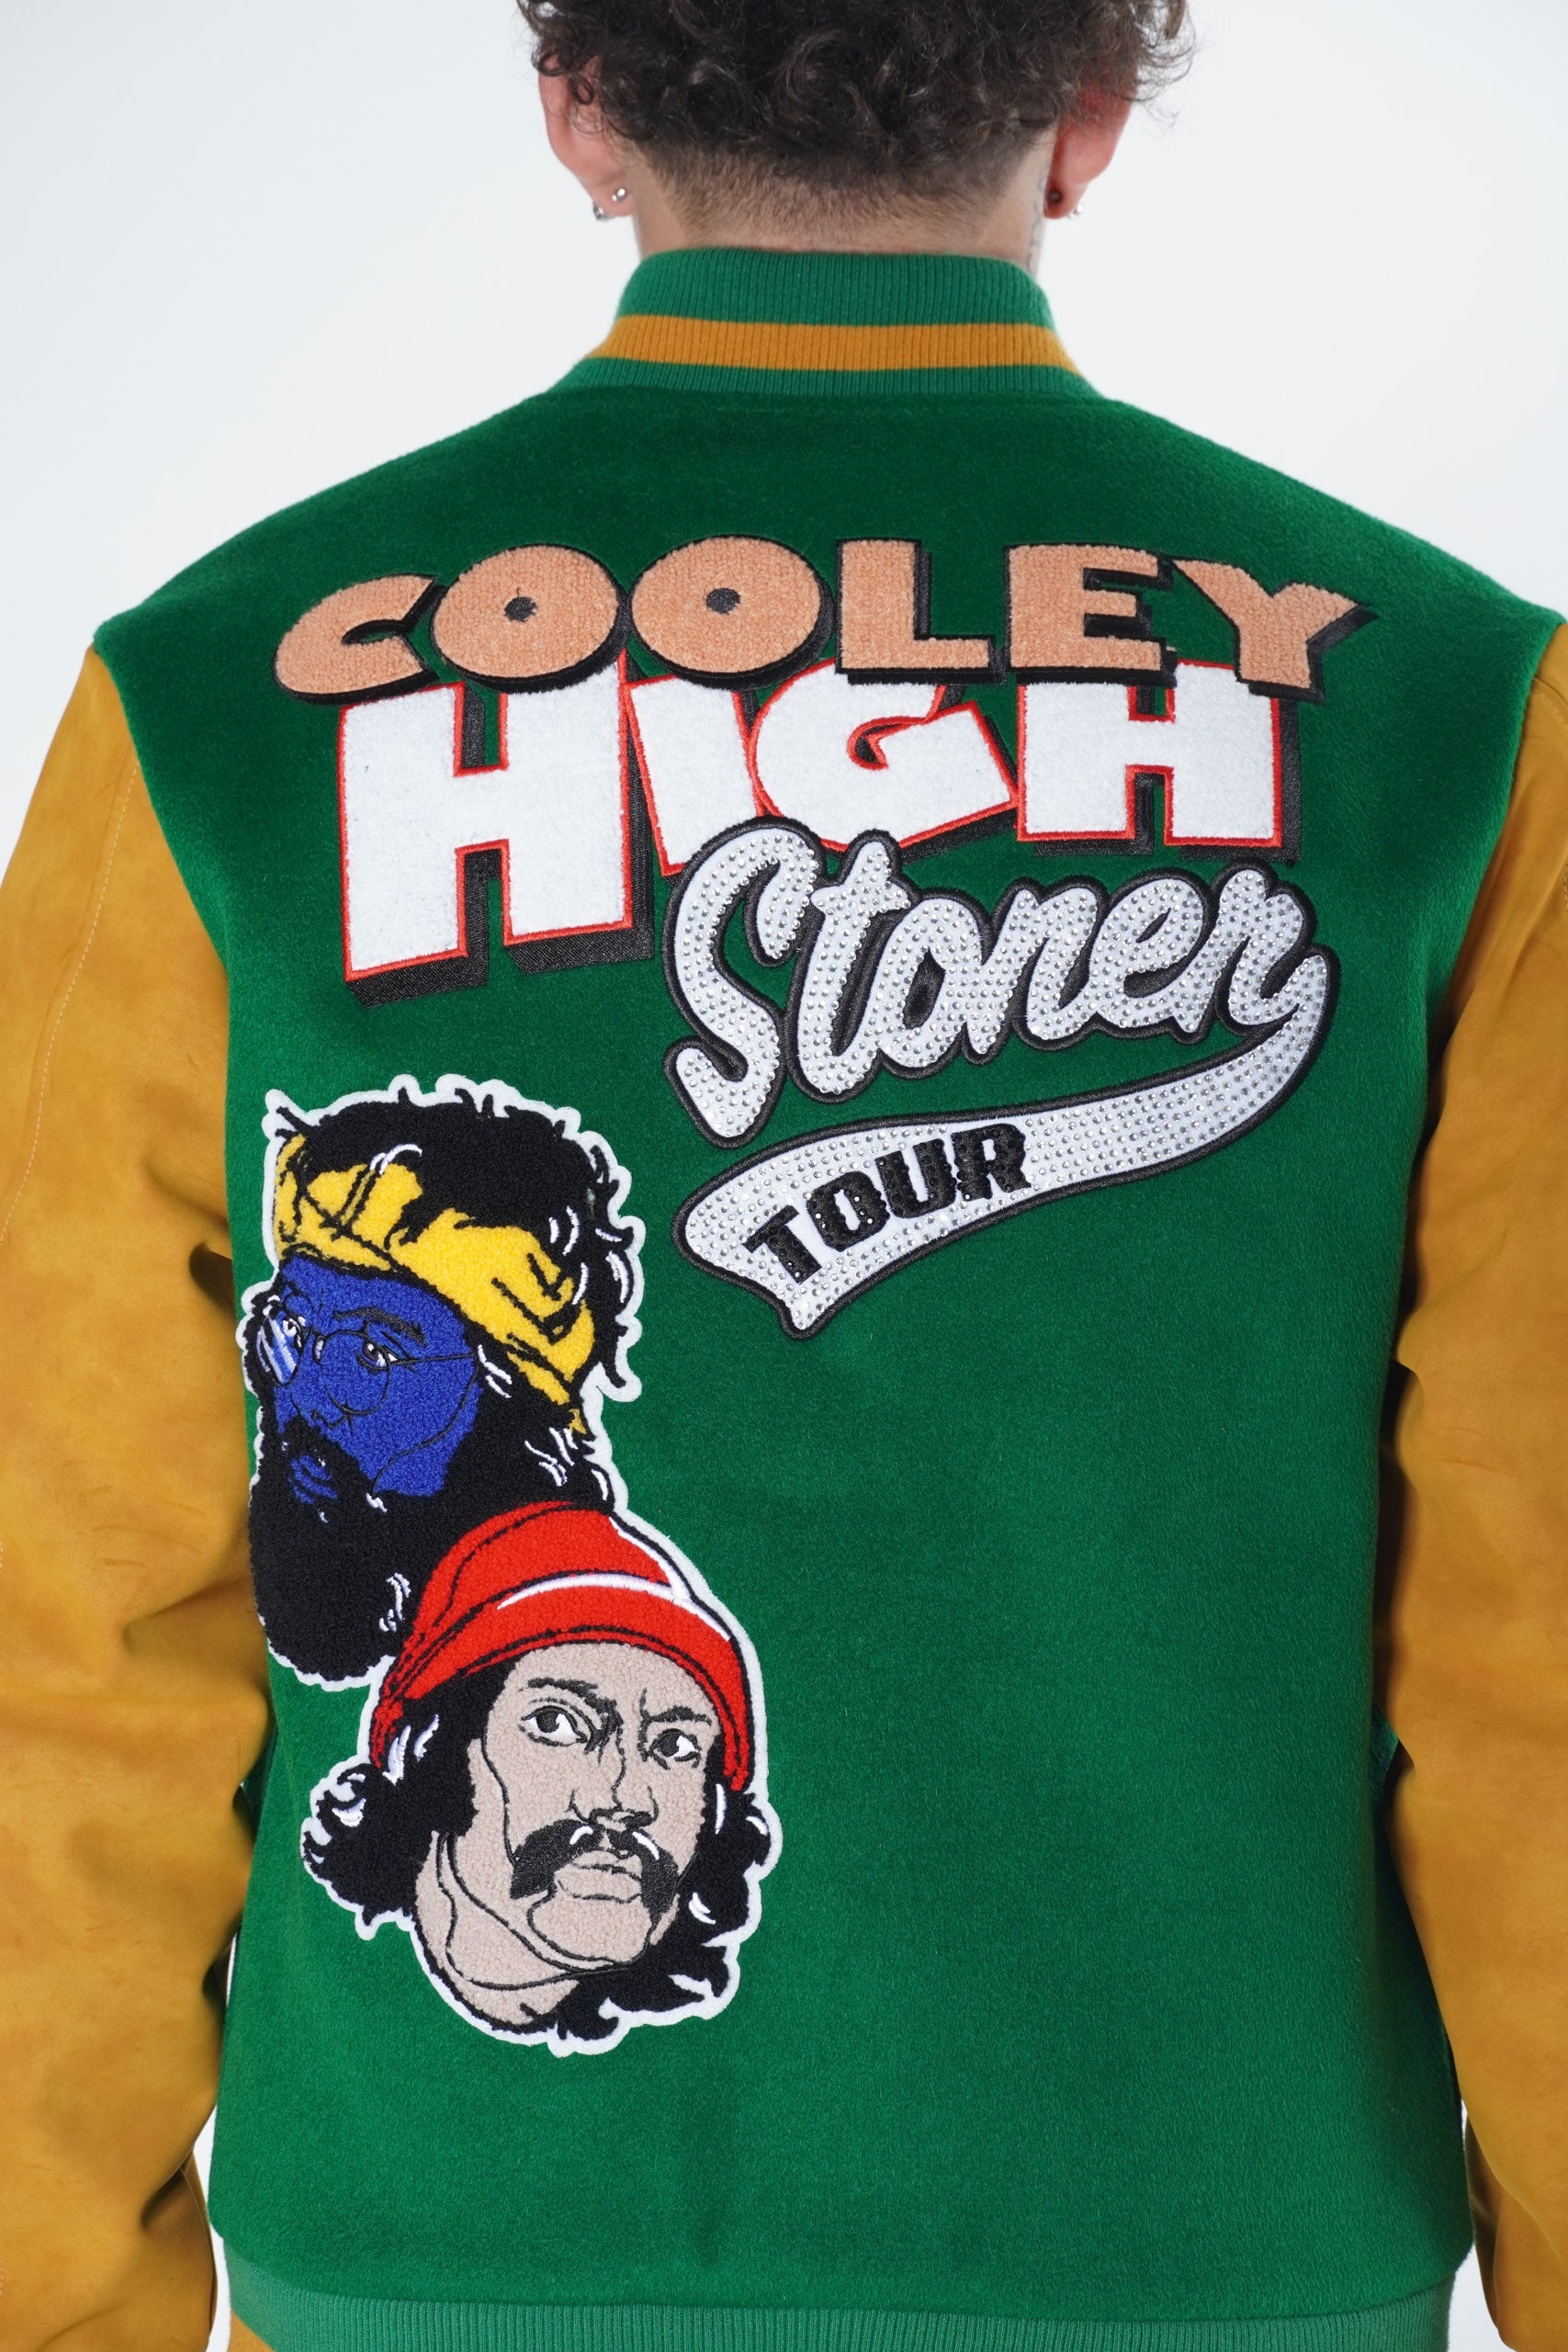 F1040 Cooley High Wool Varsity Jacket - Green